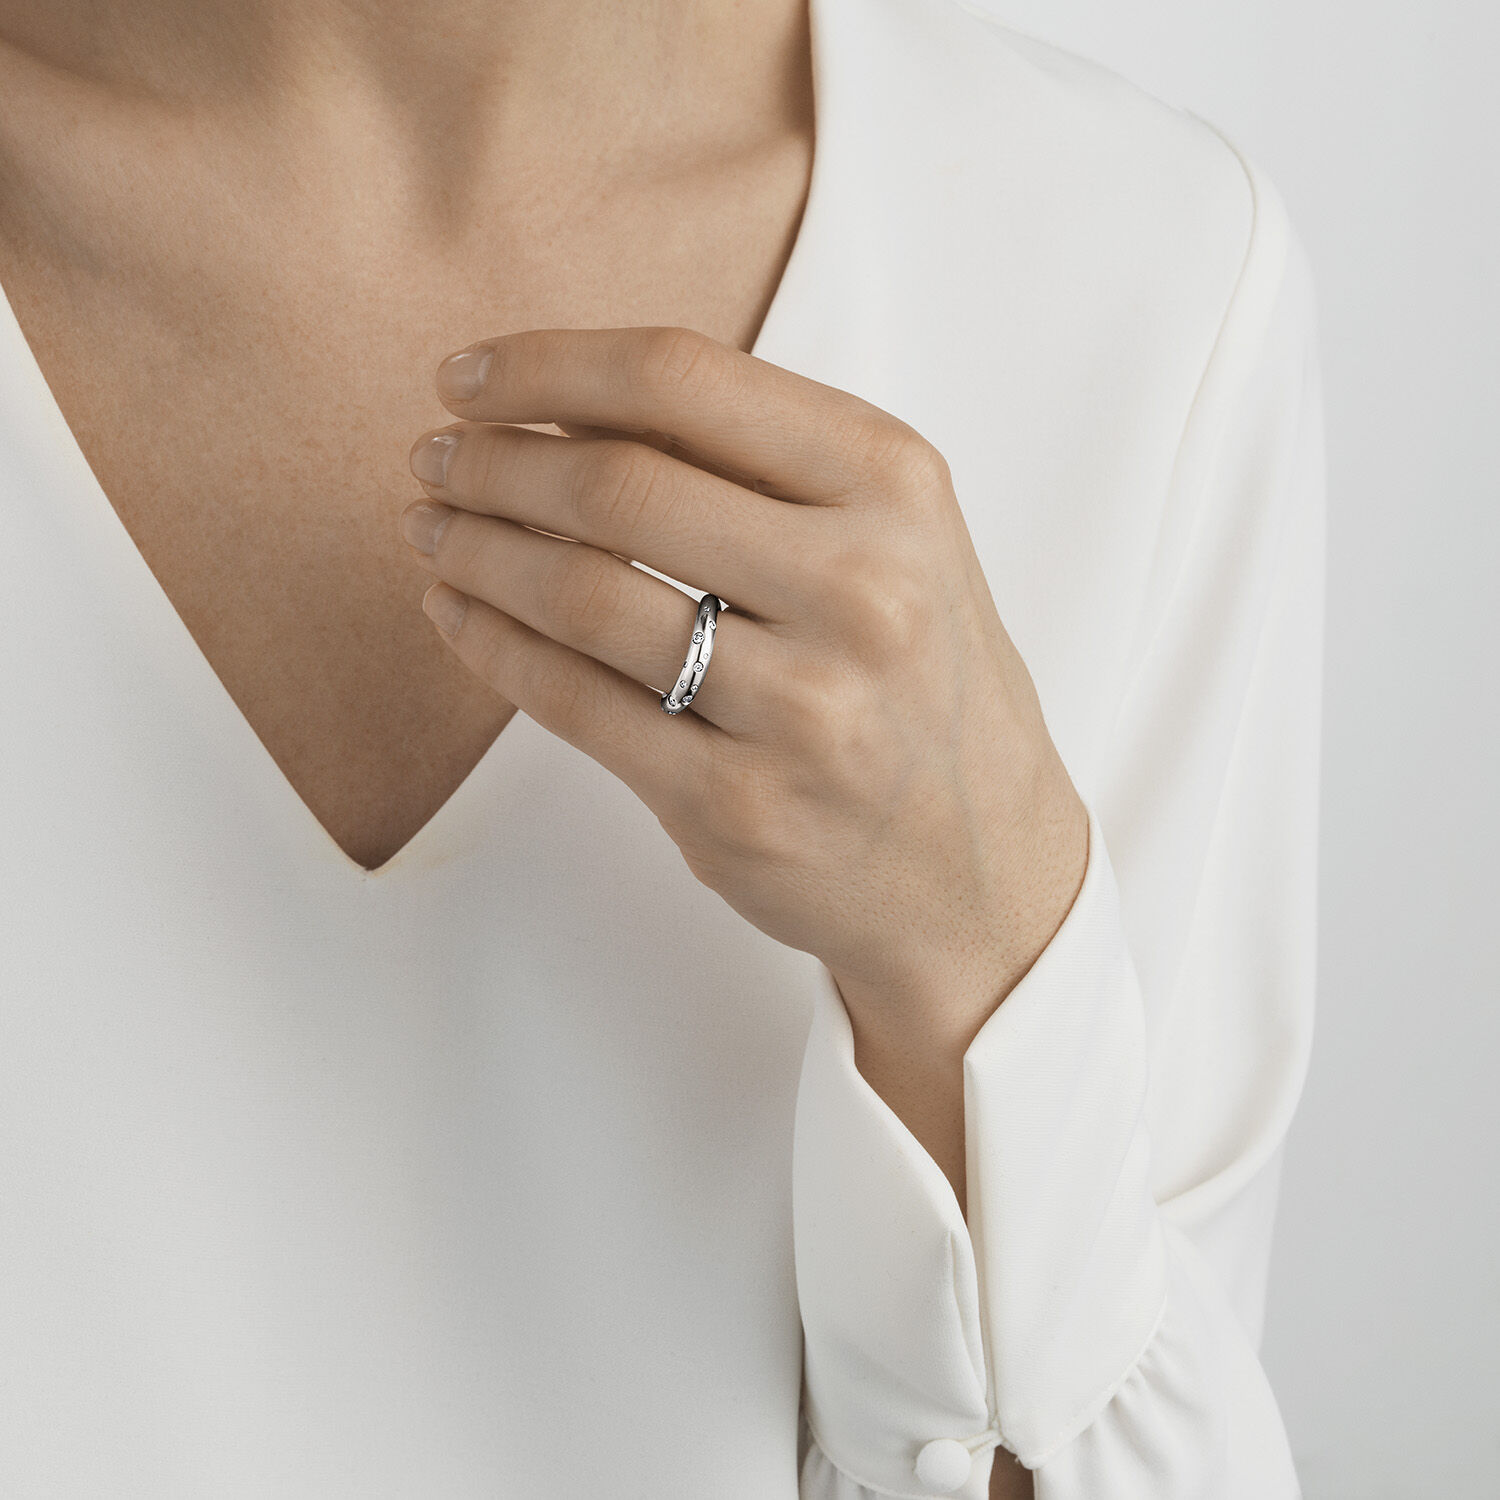 Offspring silver and diamond ring for women | Georg Jensen